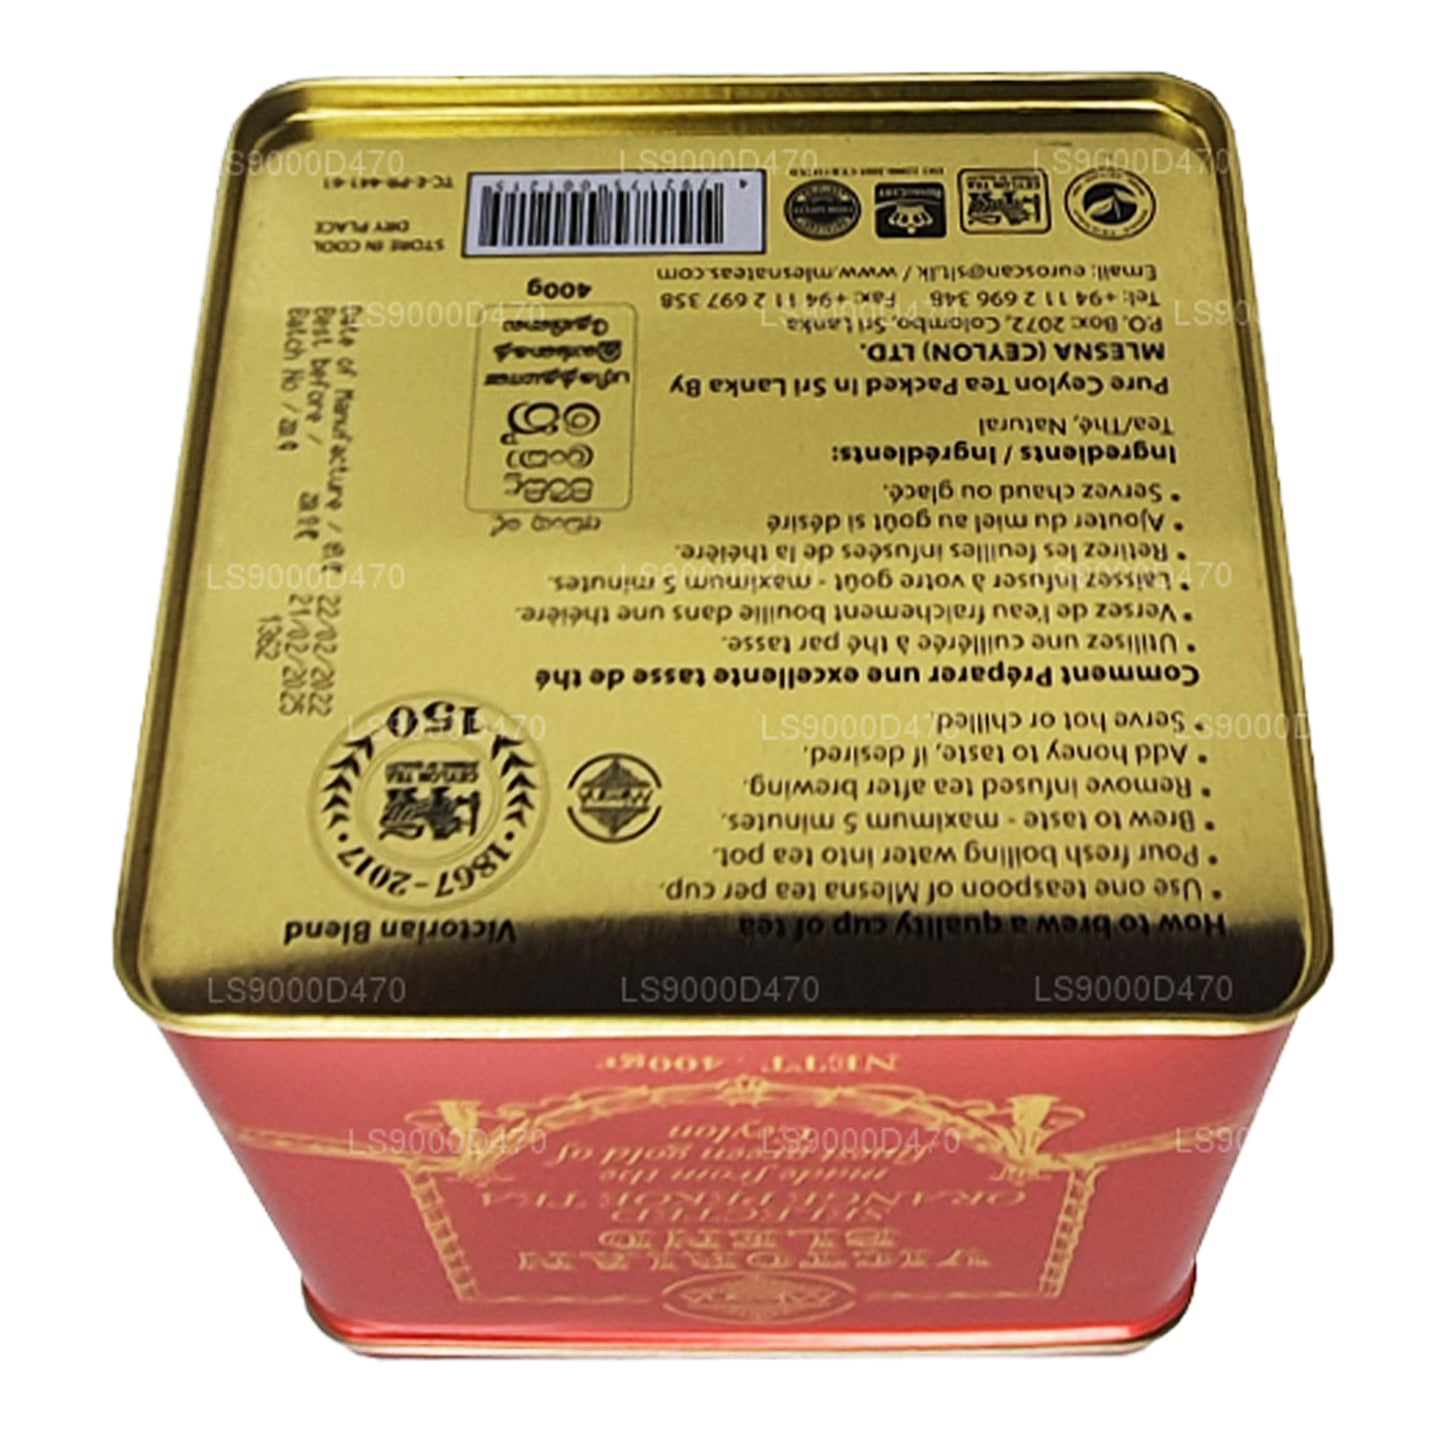 Mlesna Victorian Blend OP Grade Leaf Tea (200g)